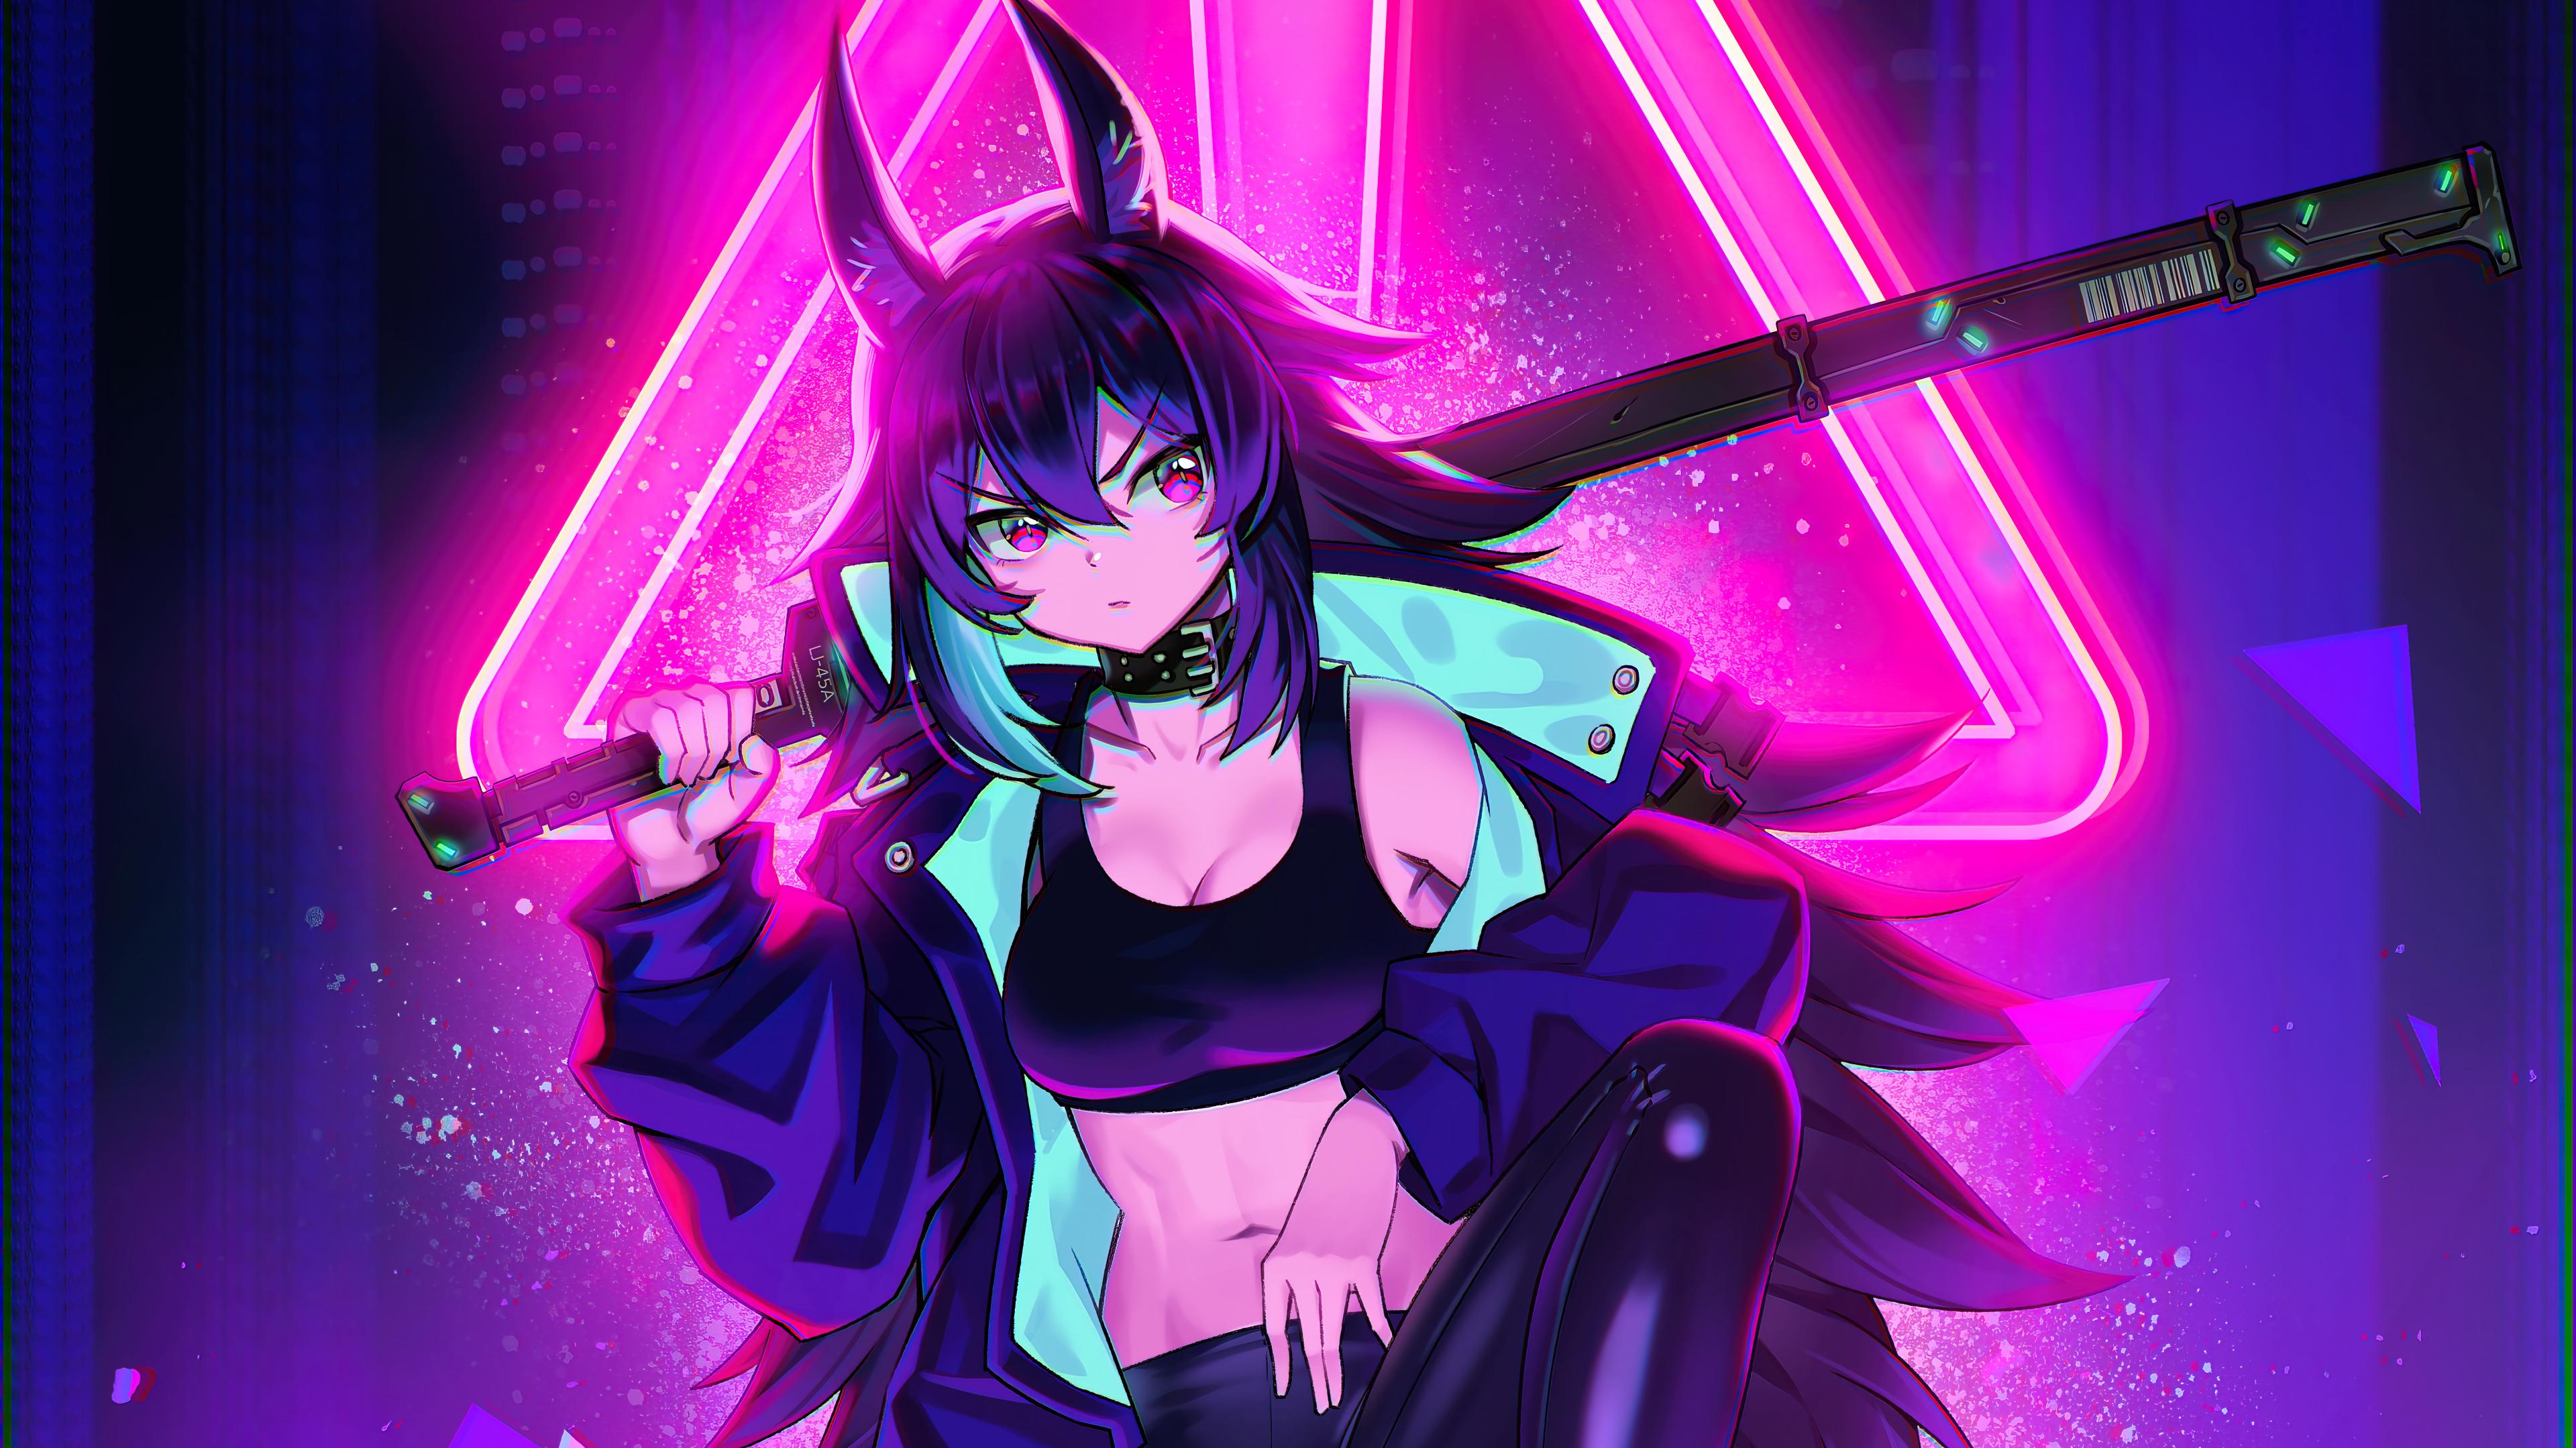 Cyberpunk Anime Girl By Afrial